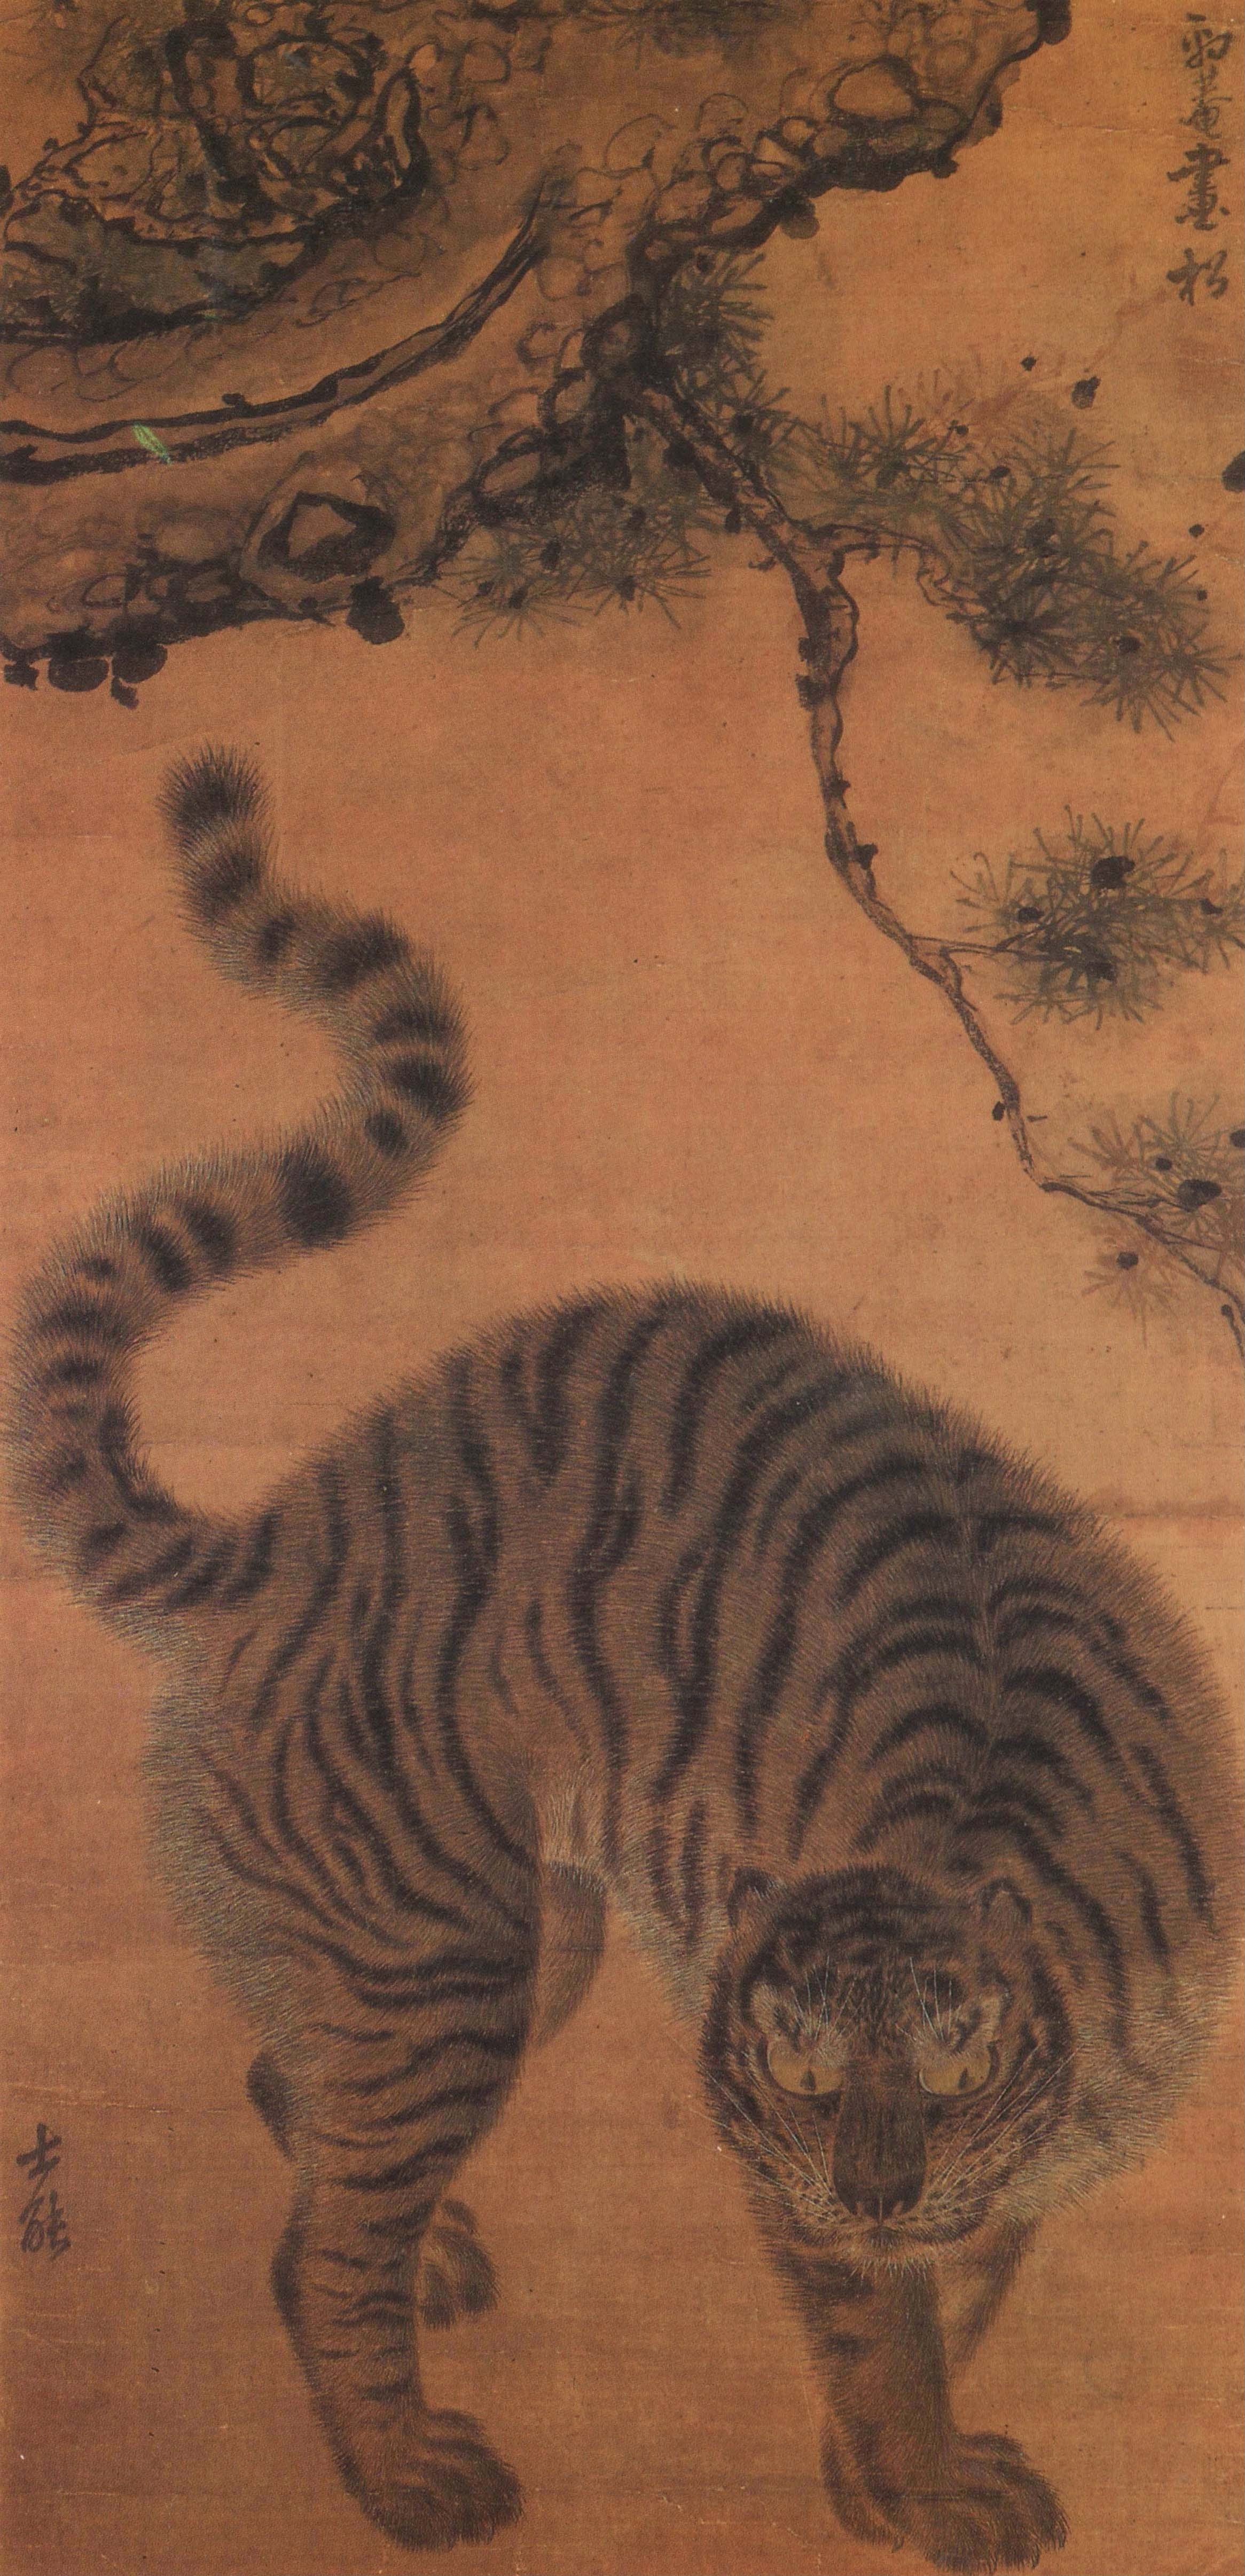 Tigers in Korean culture - Wikipedia